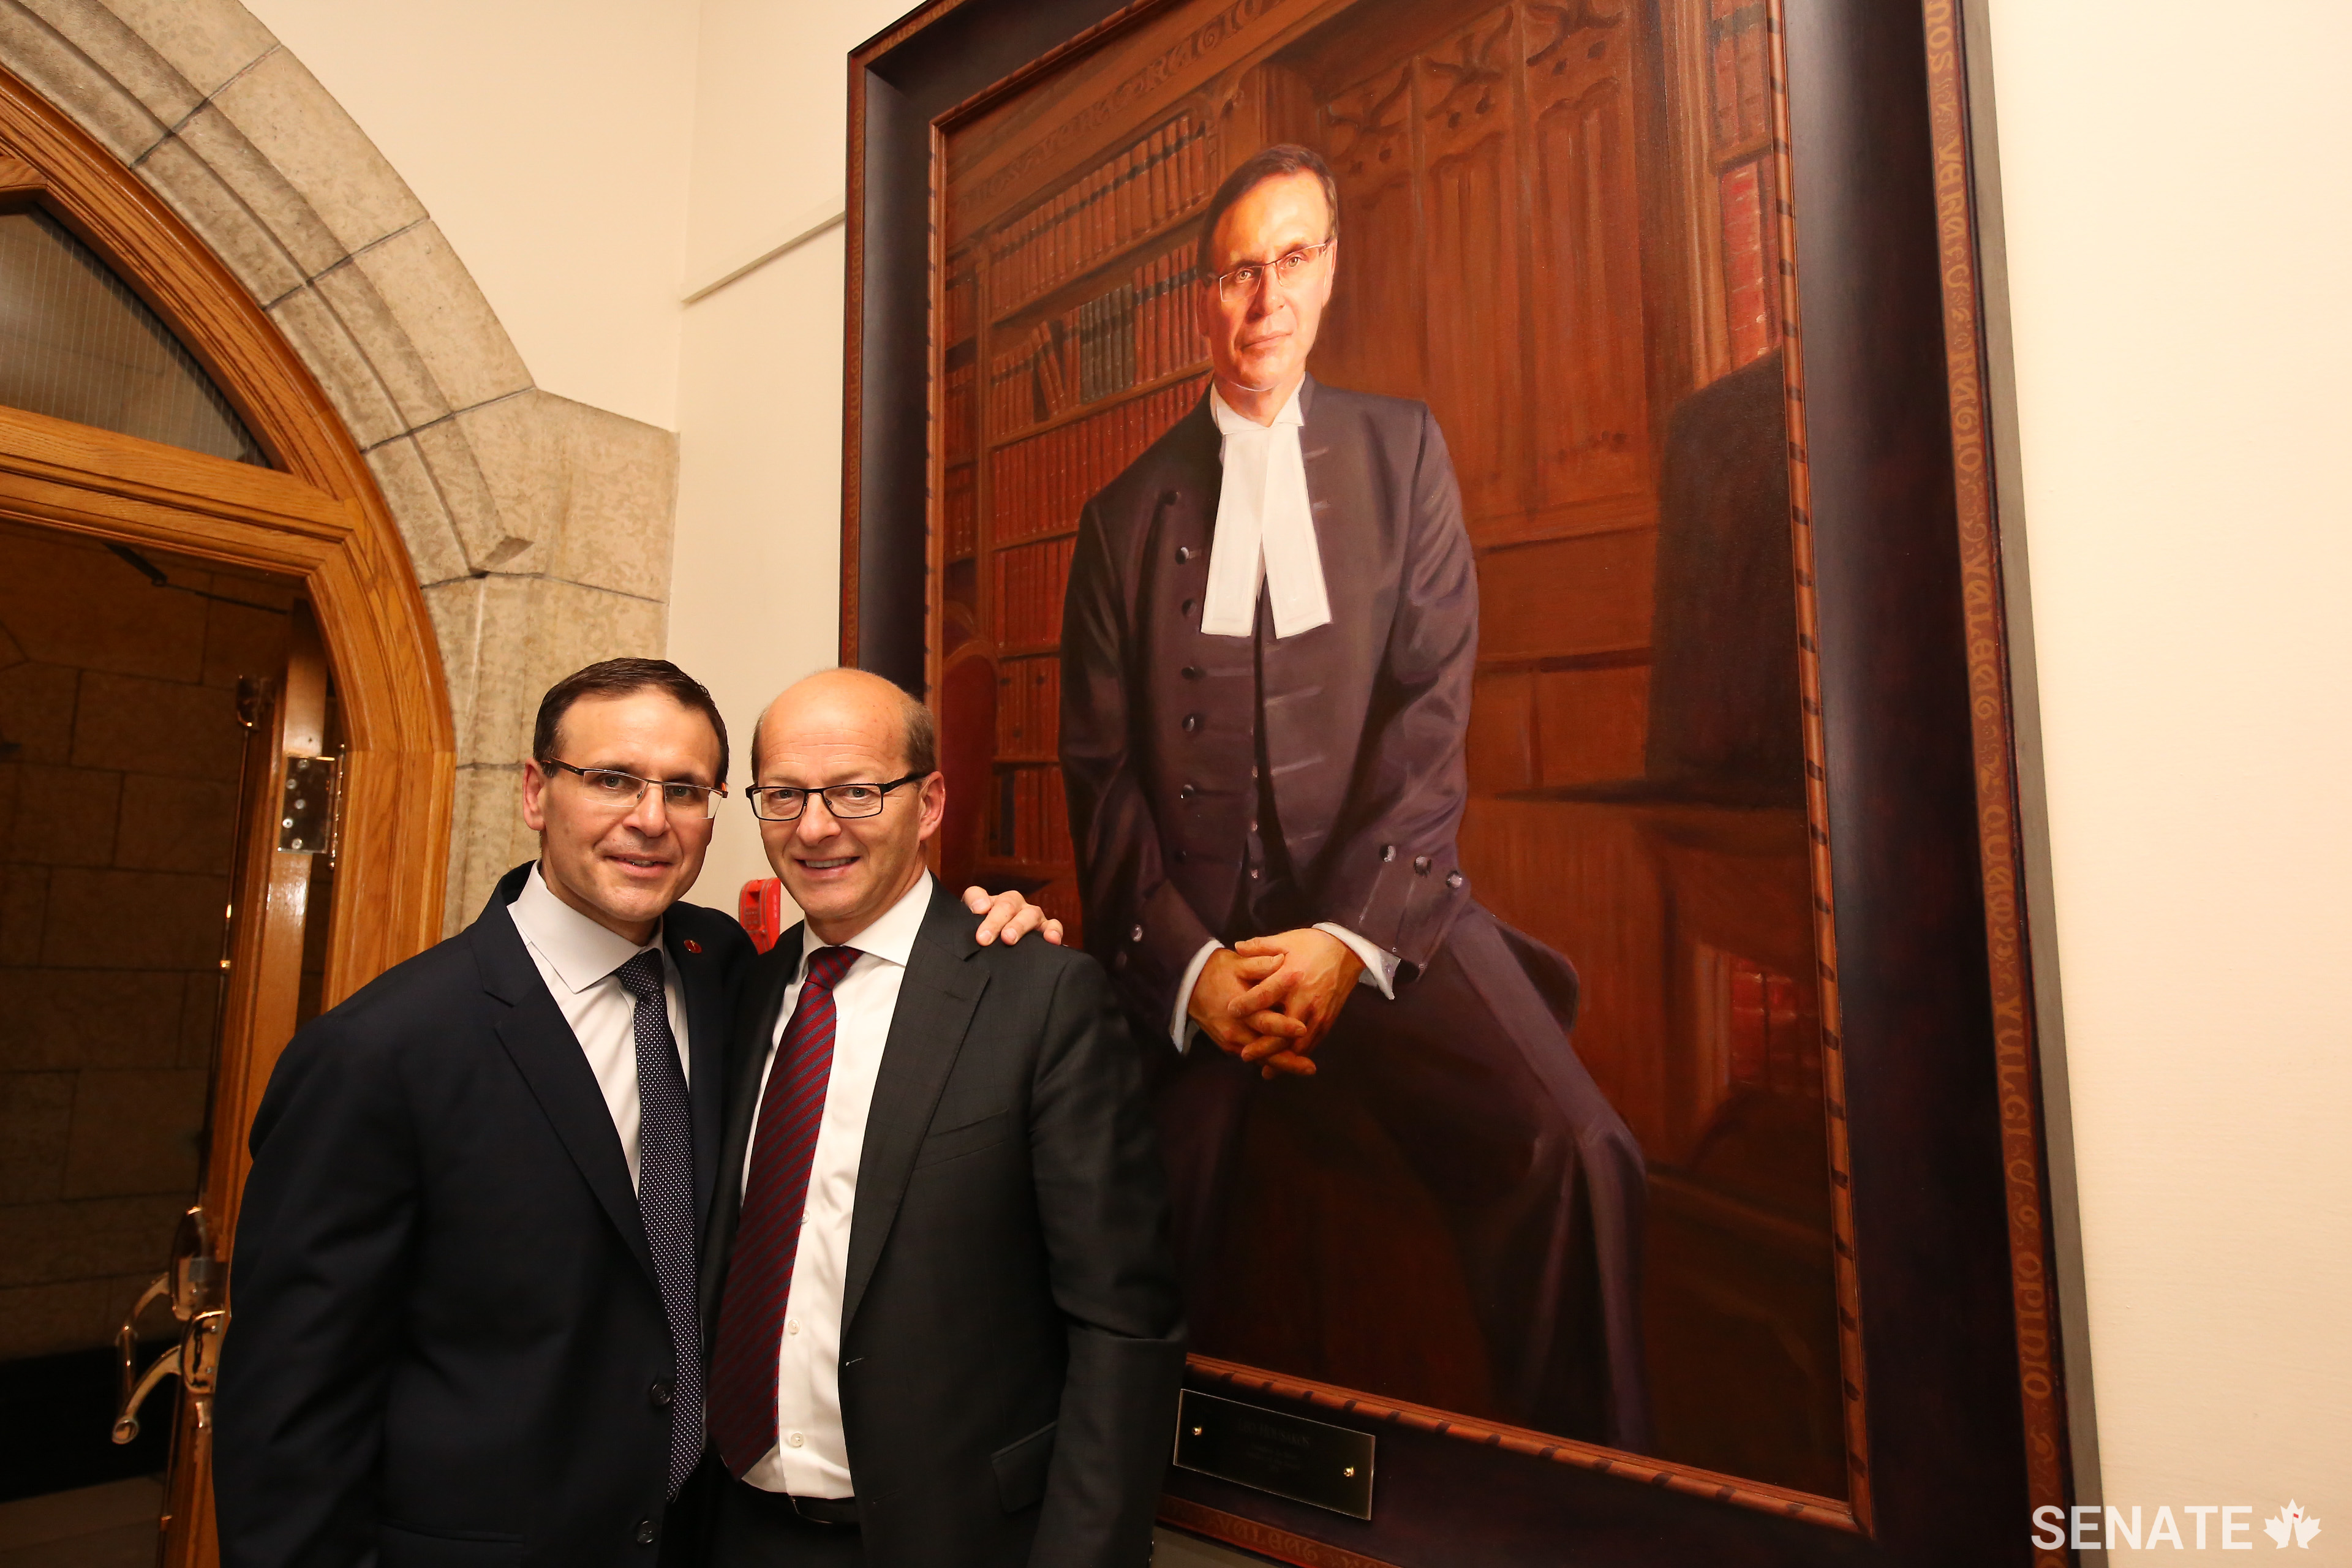 Senator Leo Housakos, left, shares a moment with friend and colleague Senator Claude Carignan after a portrait commemorating Senator Housakos’ time as Speaker was hung in Parliament.